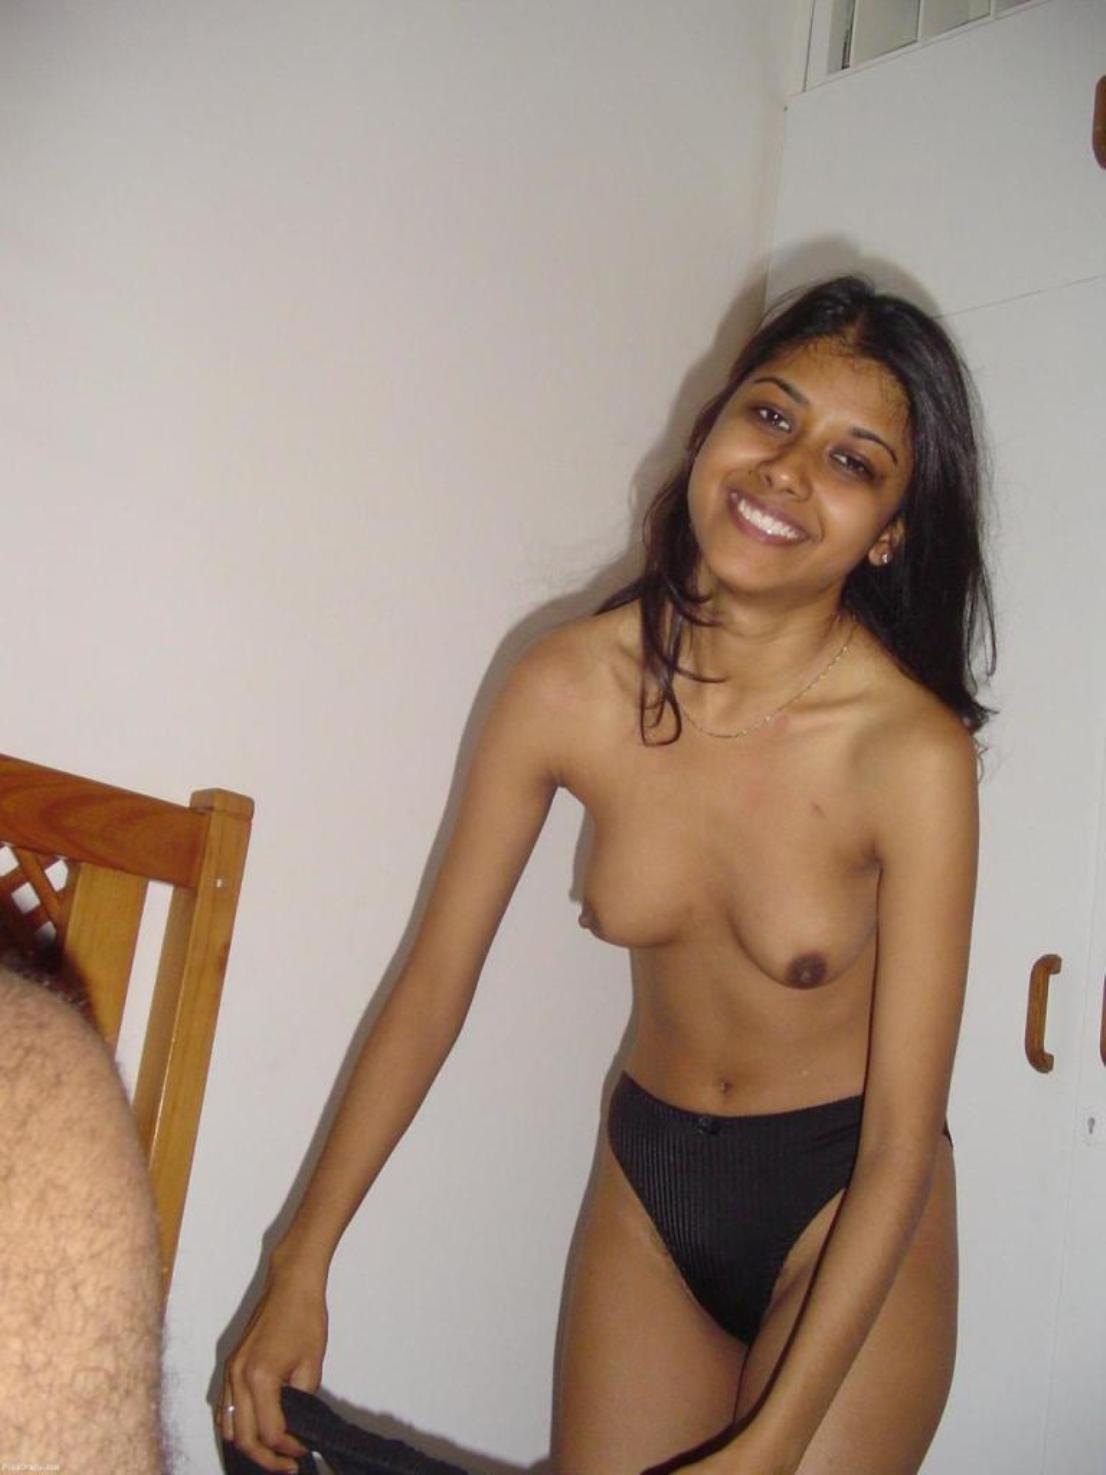 Indian images bengali girls of naked hot